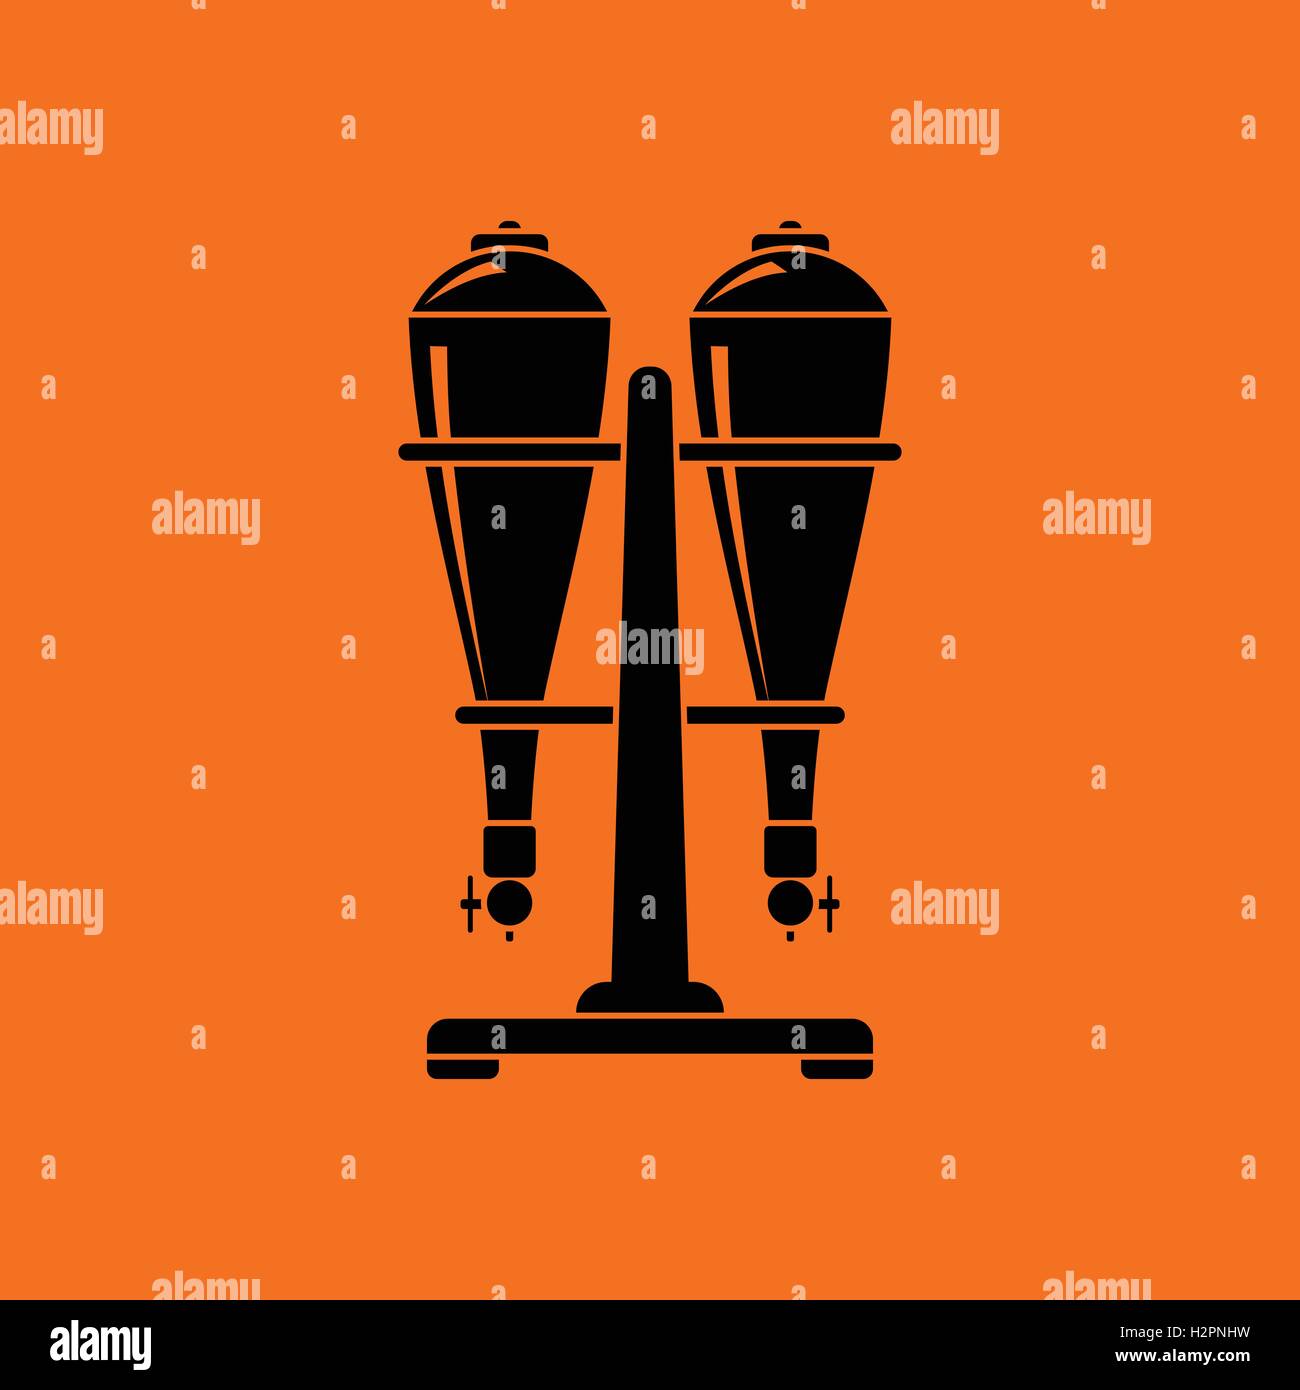 Soda siphon equipment icon. Orange background with black. Vector illustration. Stock Vector